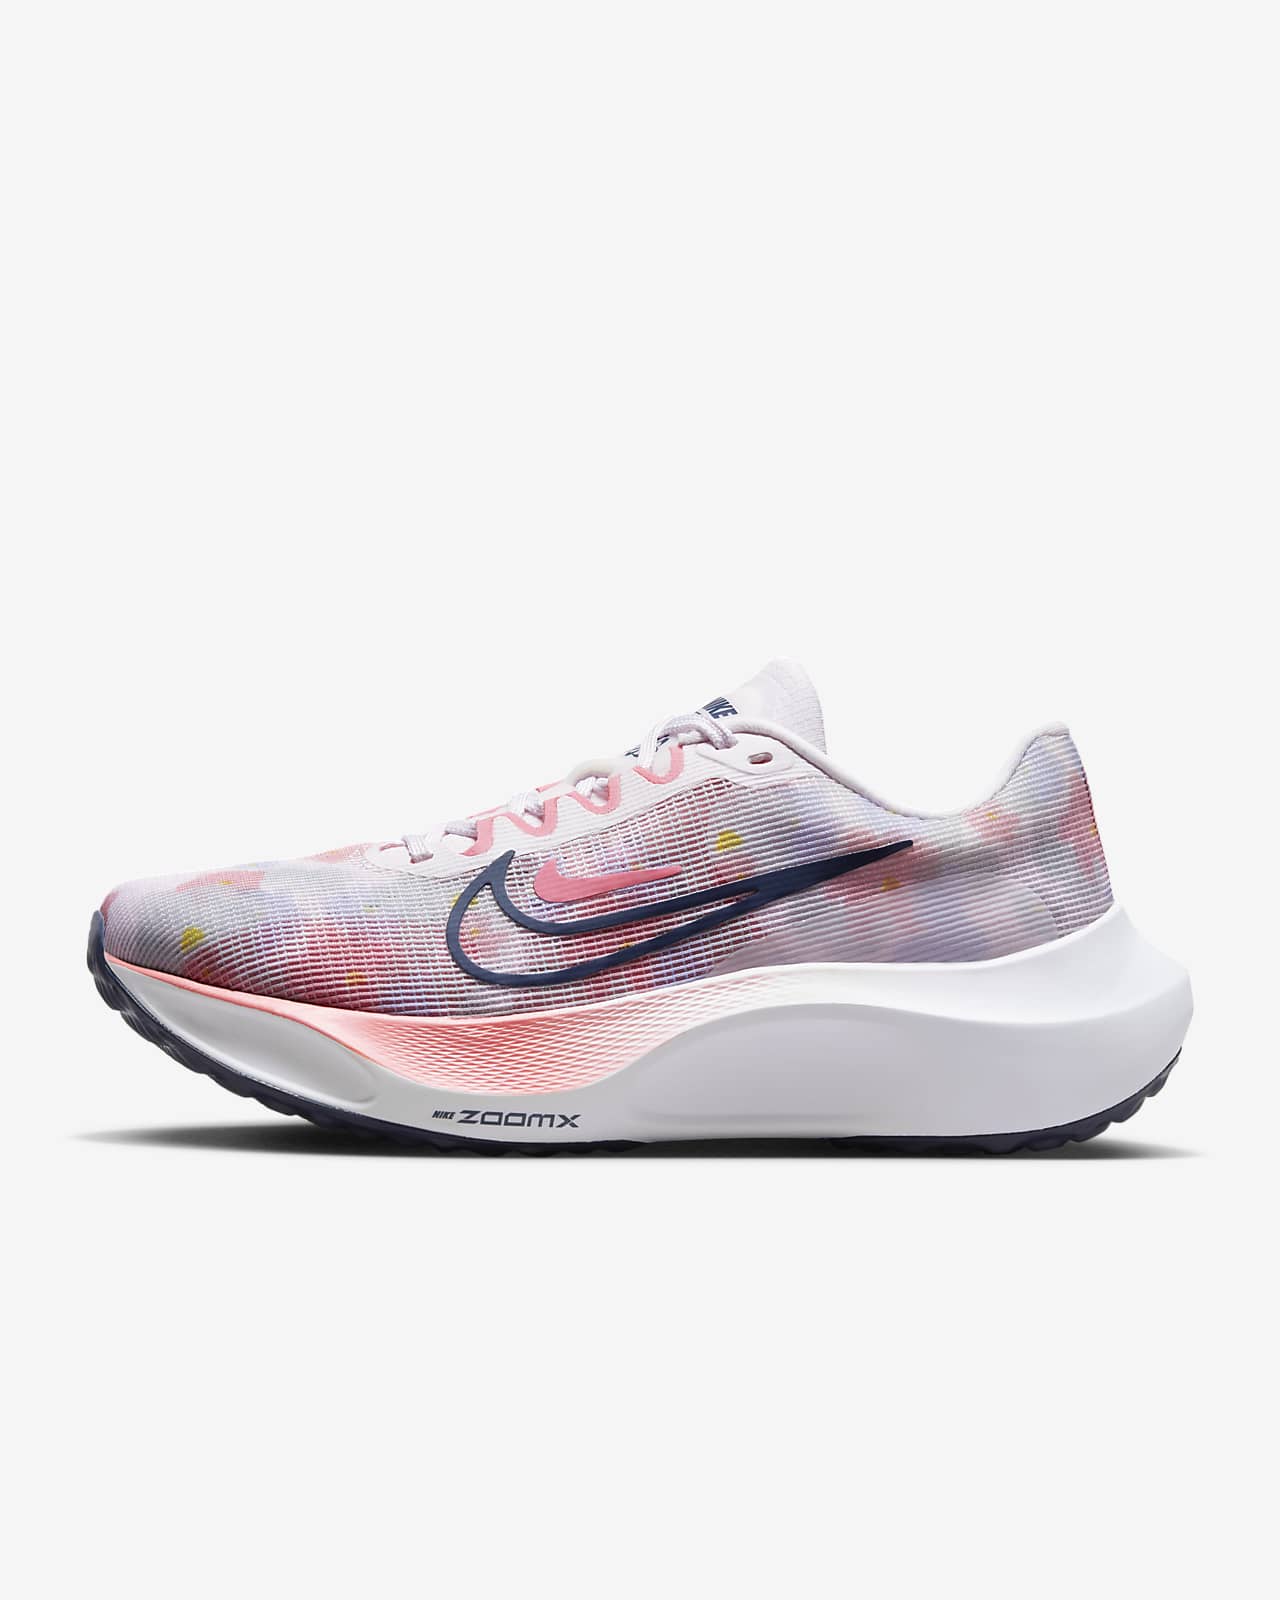 Nike Zoom Fly 5 Premium Women's Road Running Shoes